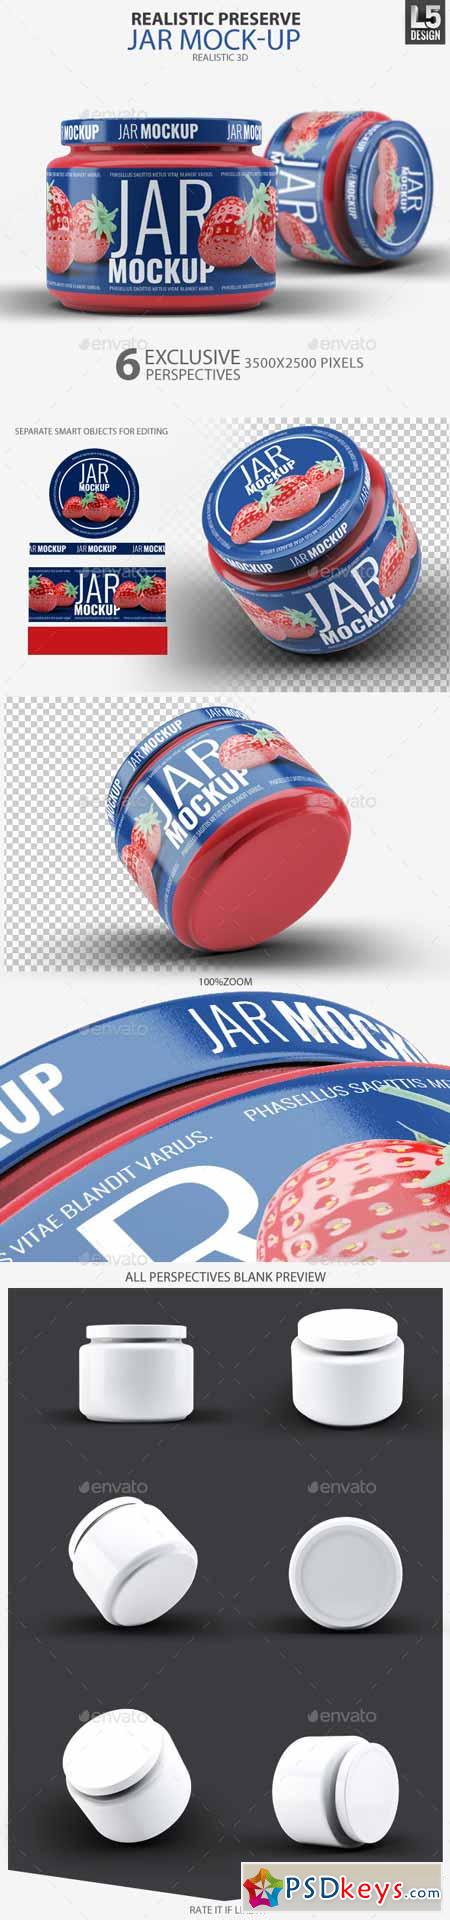 Realistic Preserve Jar Mock-Up 11315587